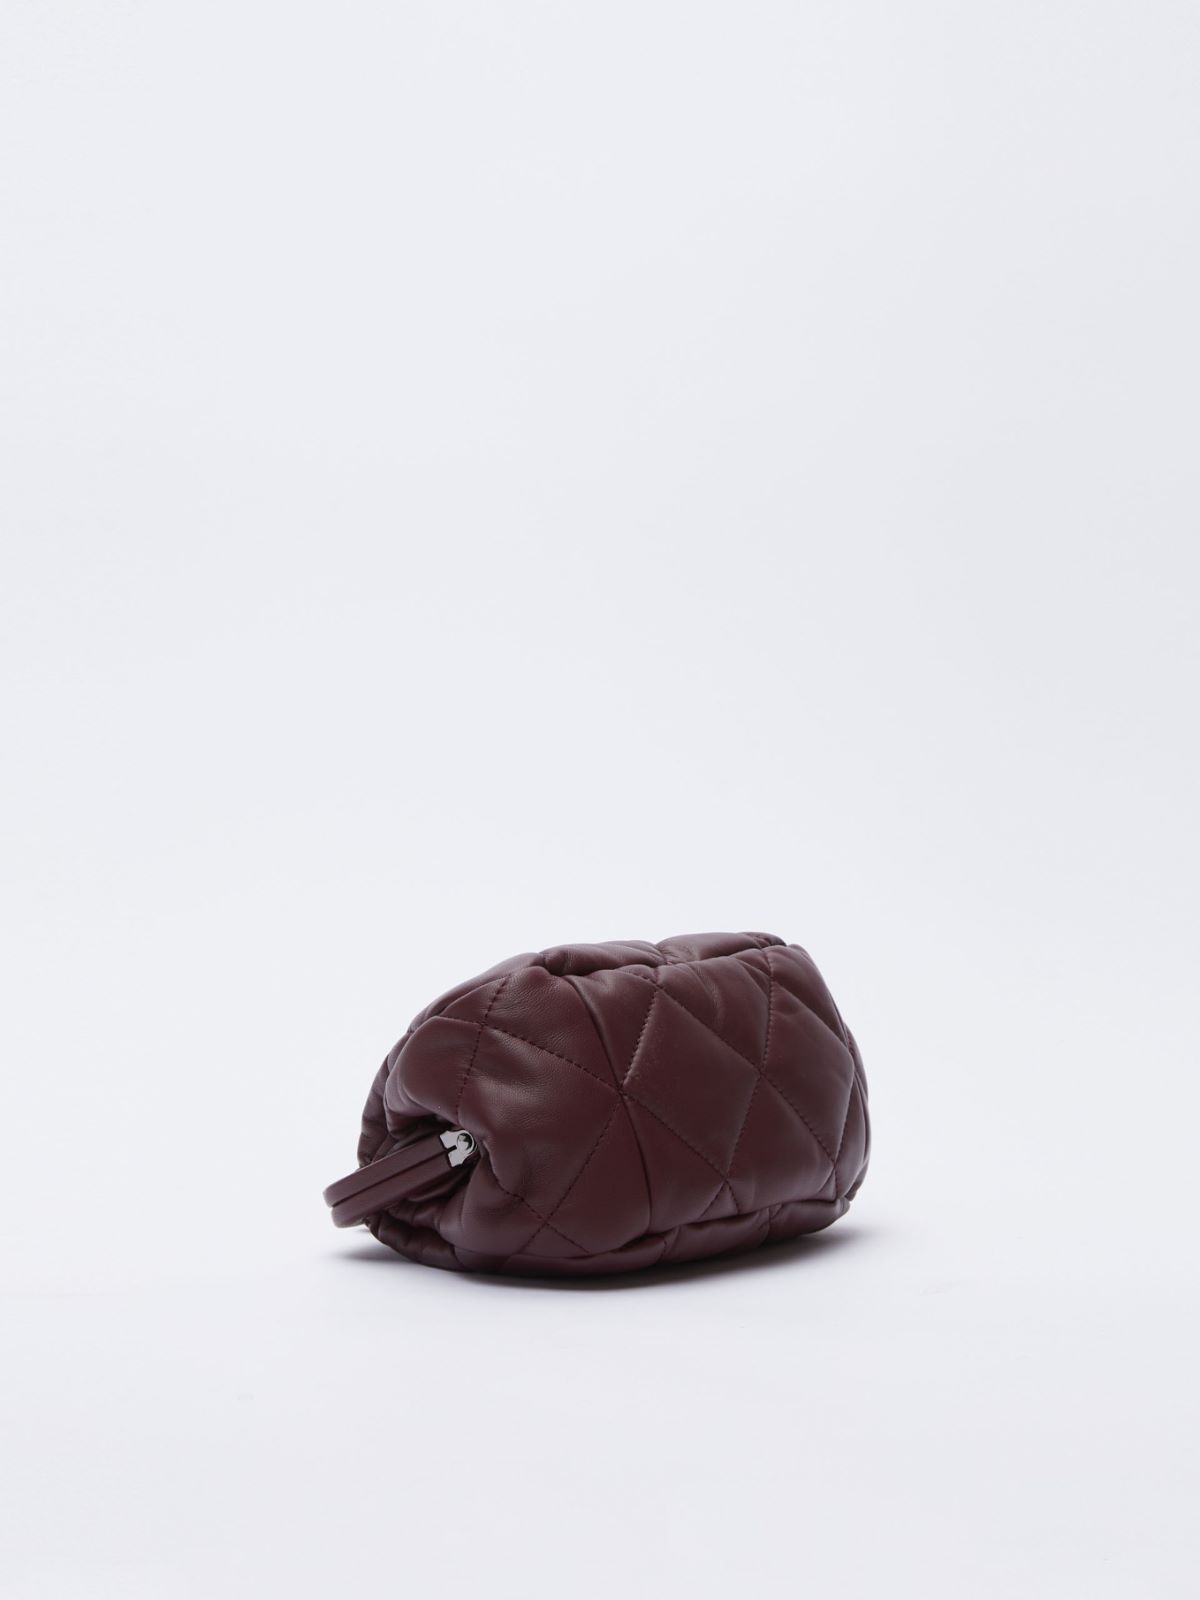 Nappa leather Pasticcino Bag - BORDEAUX - Weekend Max Mara - 4